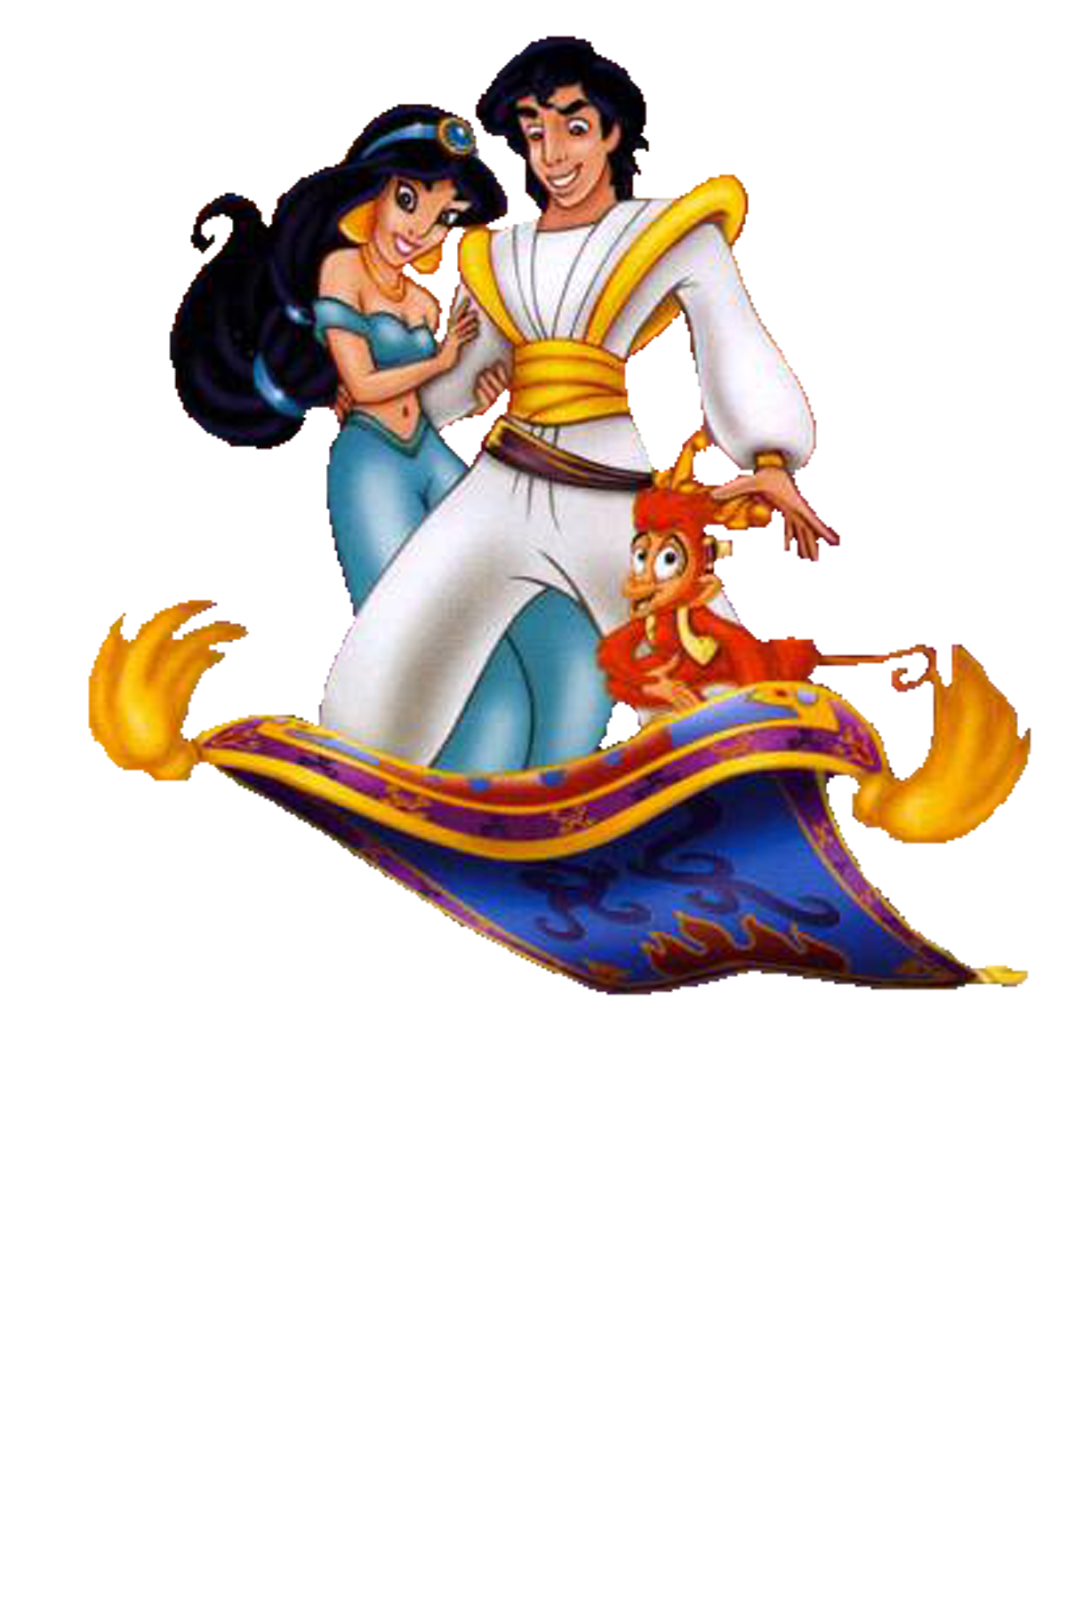 Download Aladdin Photo HQ PNG Image | FreePNGImg